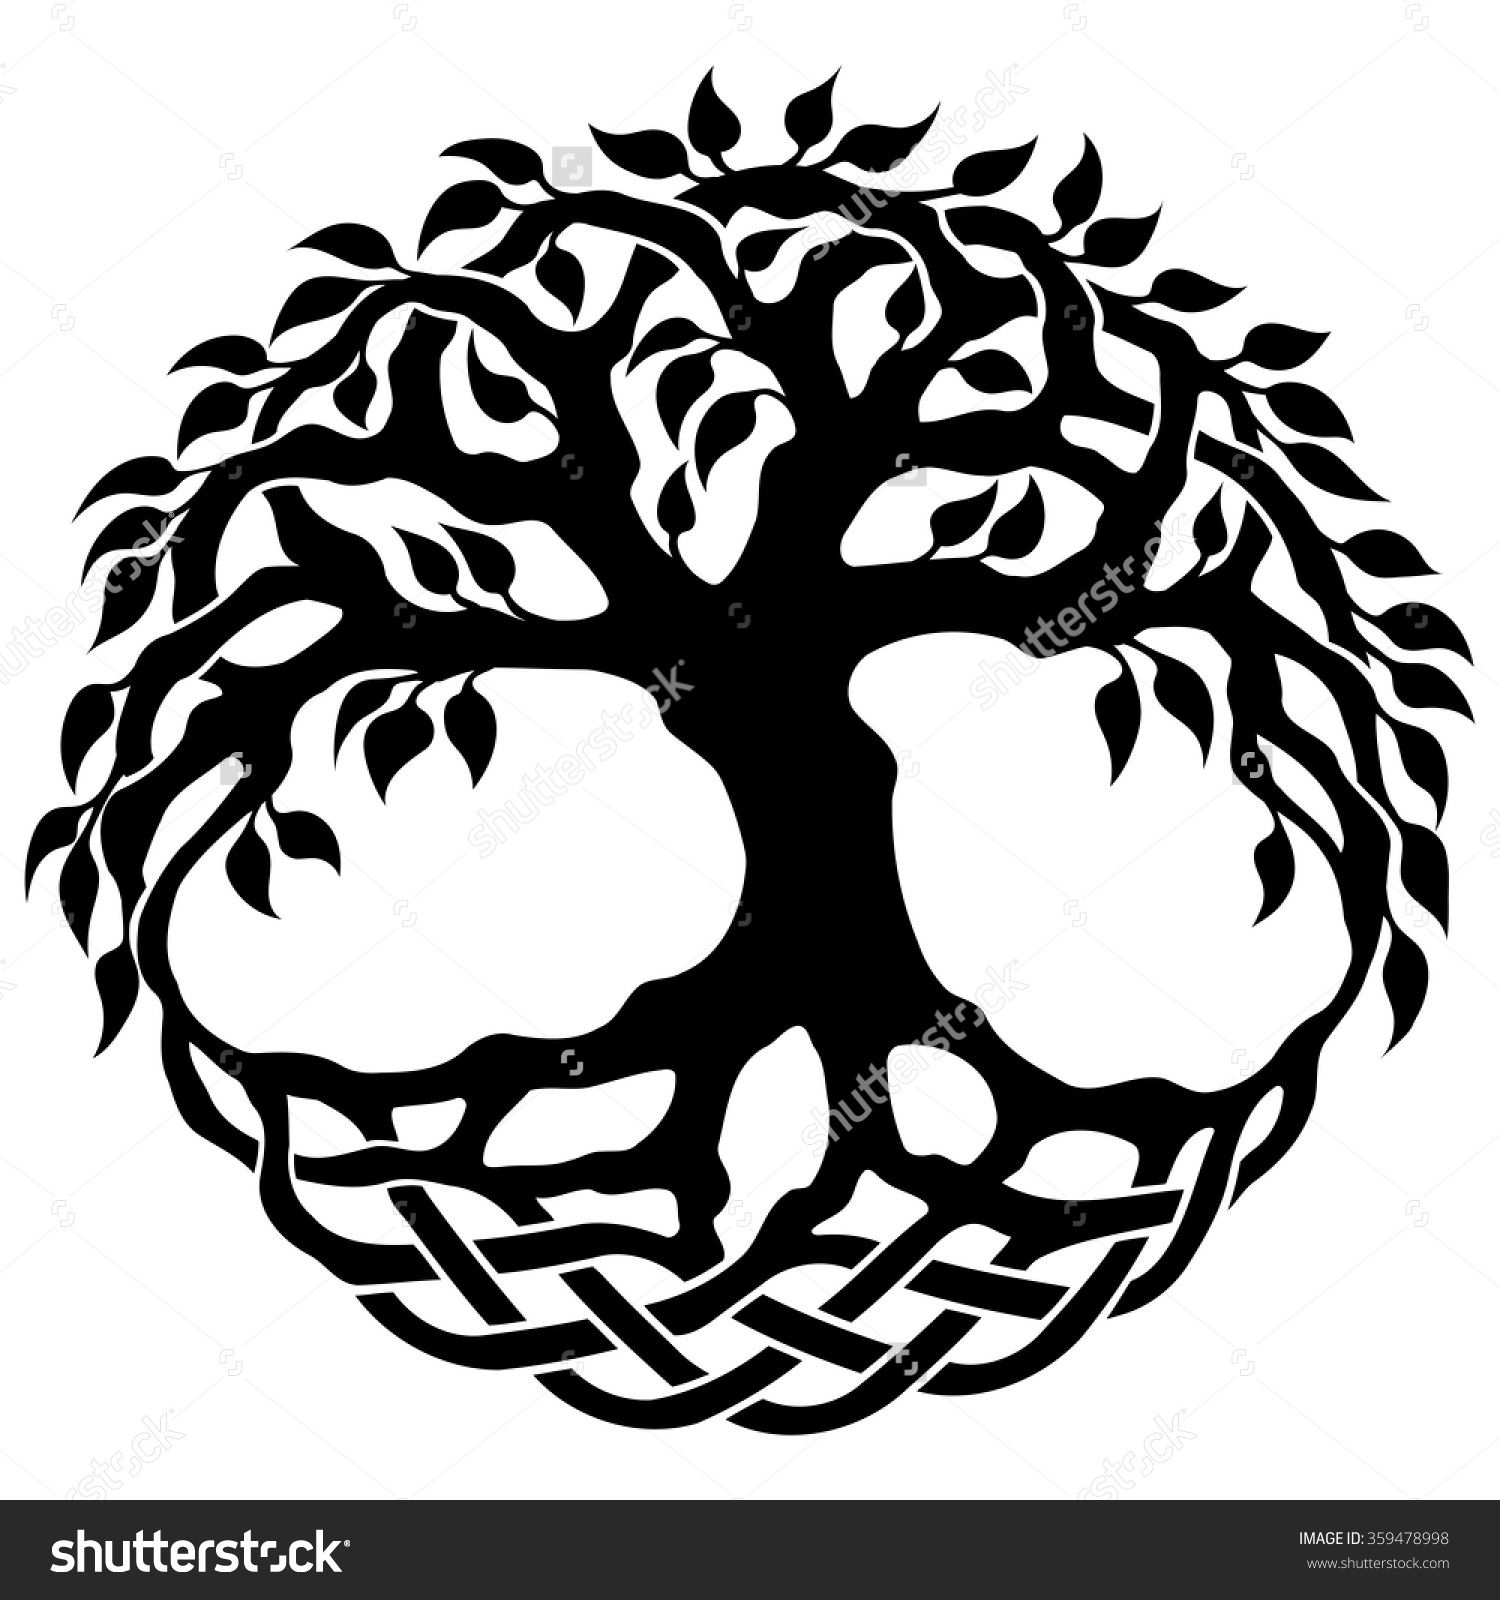 Vector Ornament, Decorative Celtic Tree Of Life